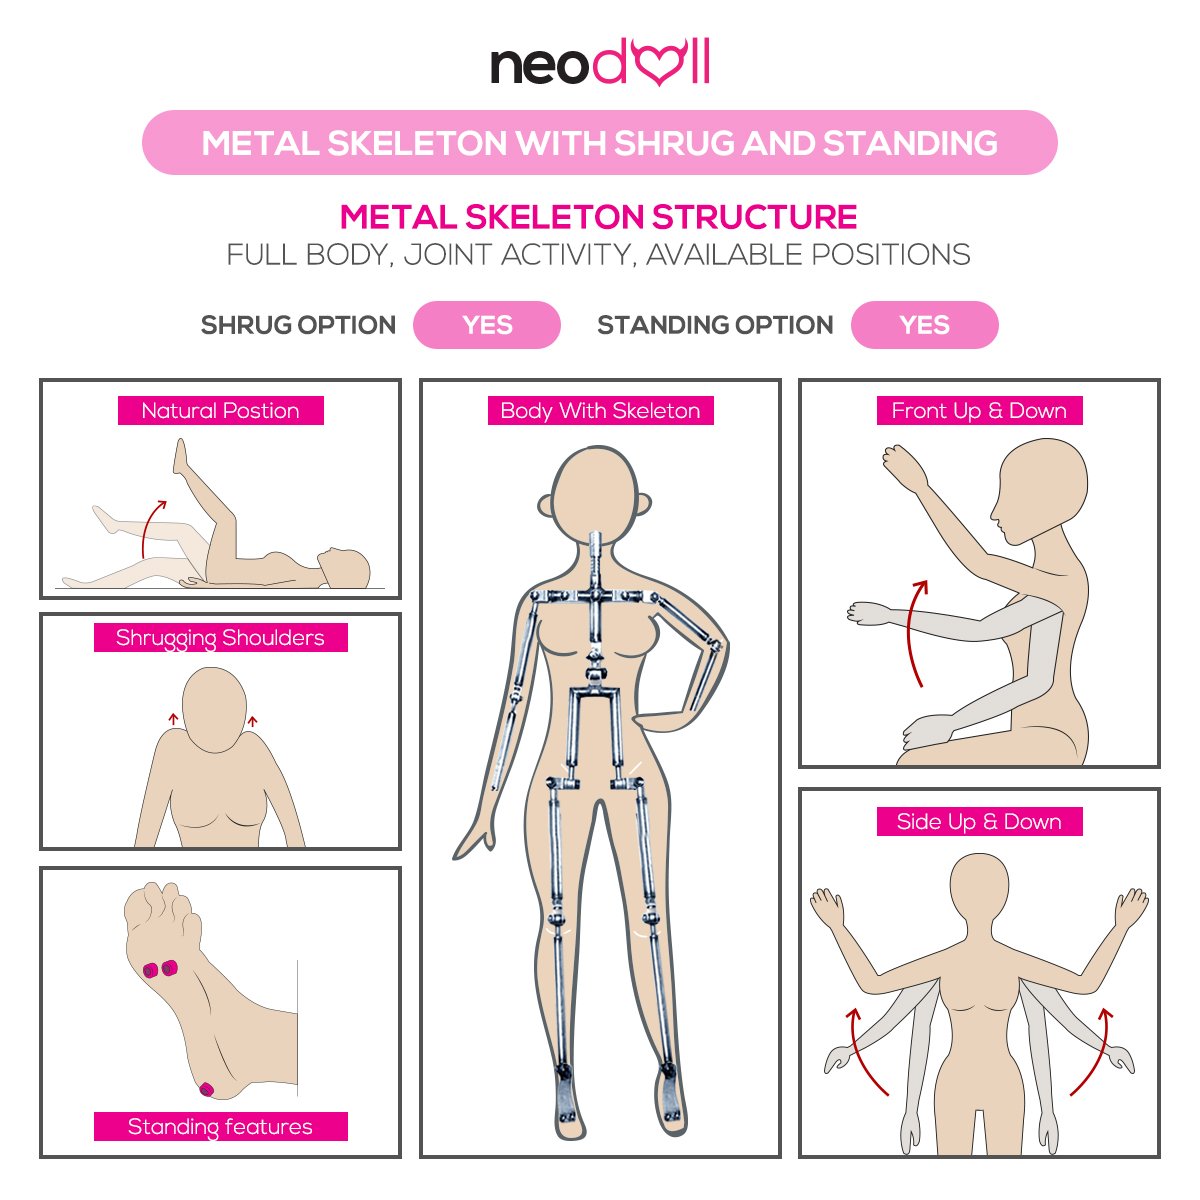 Neodoll Racy Anna - Realistic Sex Doll - 160cm - Tan